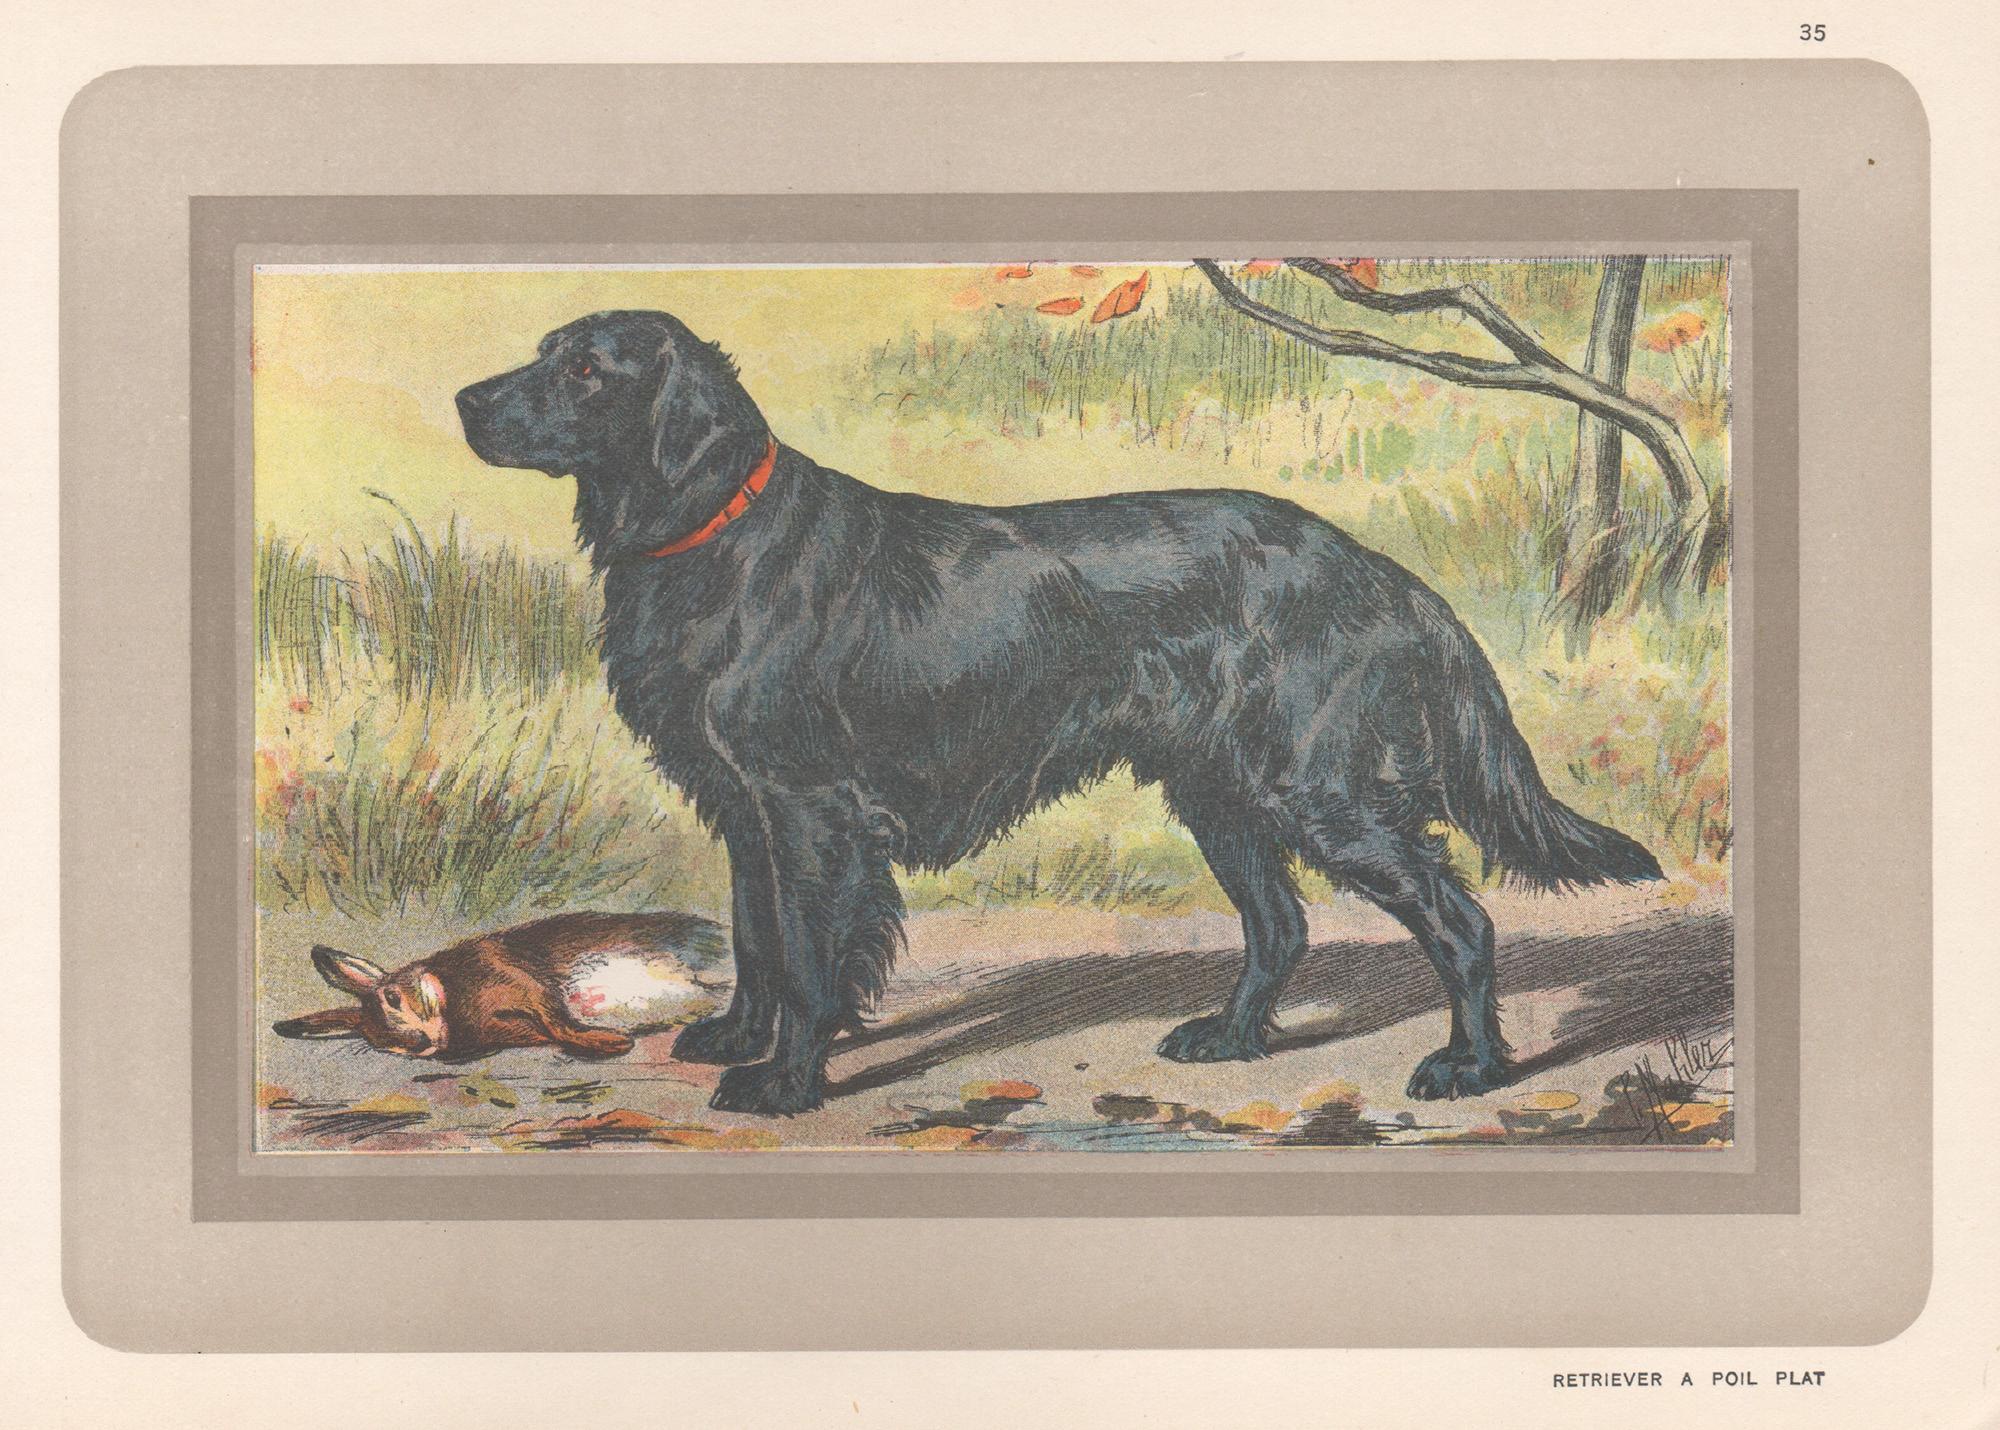 P. Mahler Animal Print - Flat Coated Retriever, French hound dog chromolithograph print, 1930s